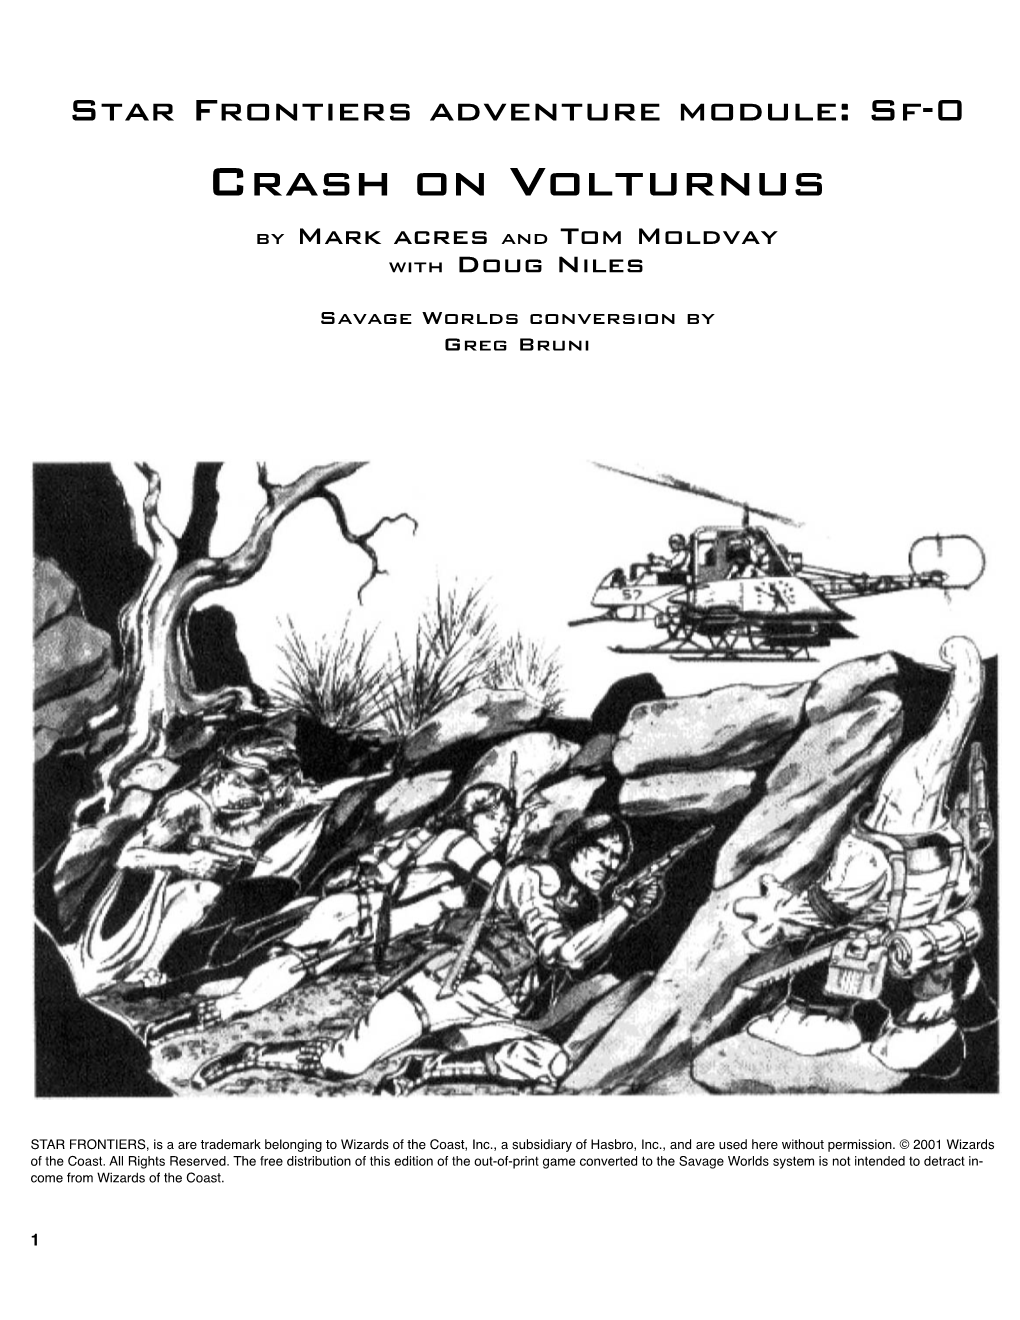 Crash on Volturnus by Mark Acres and Tom Moldvay with Doug Niles